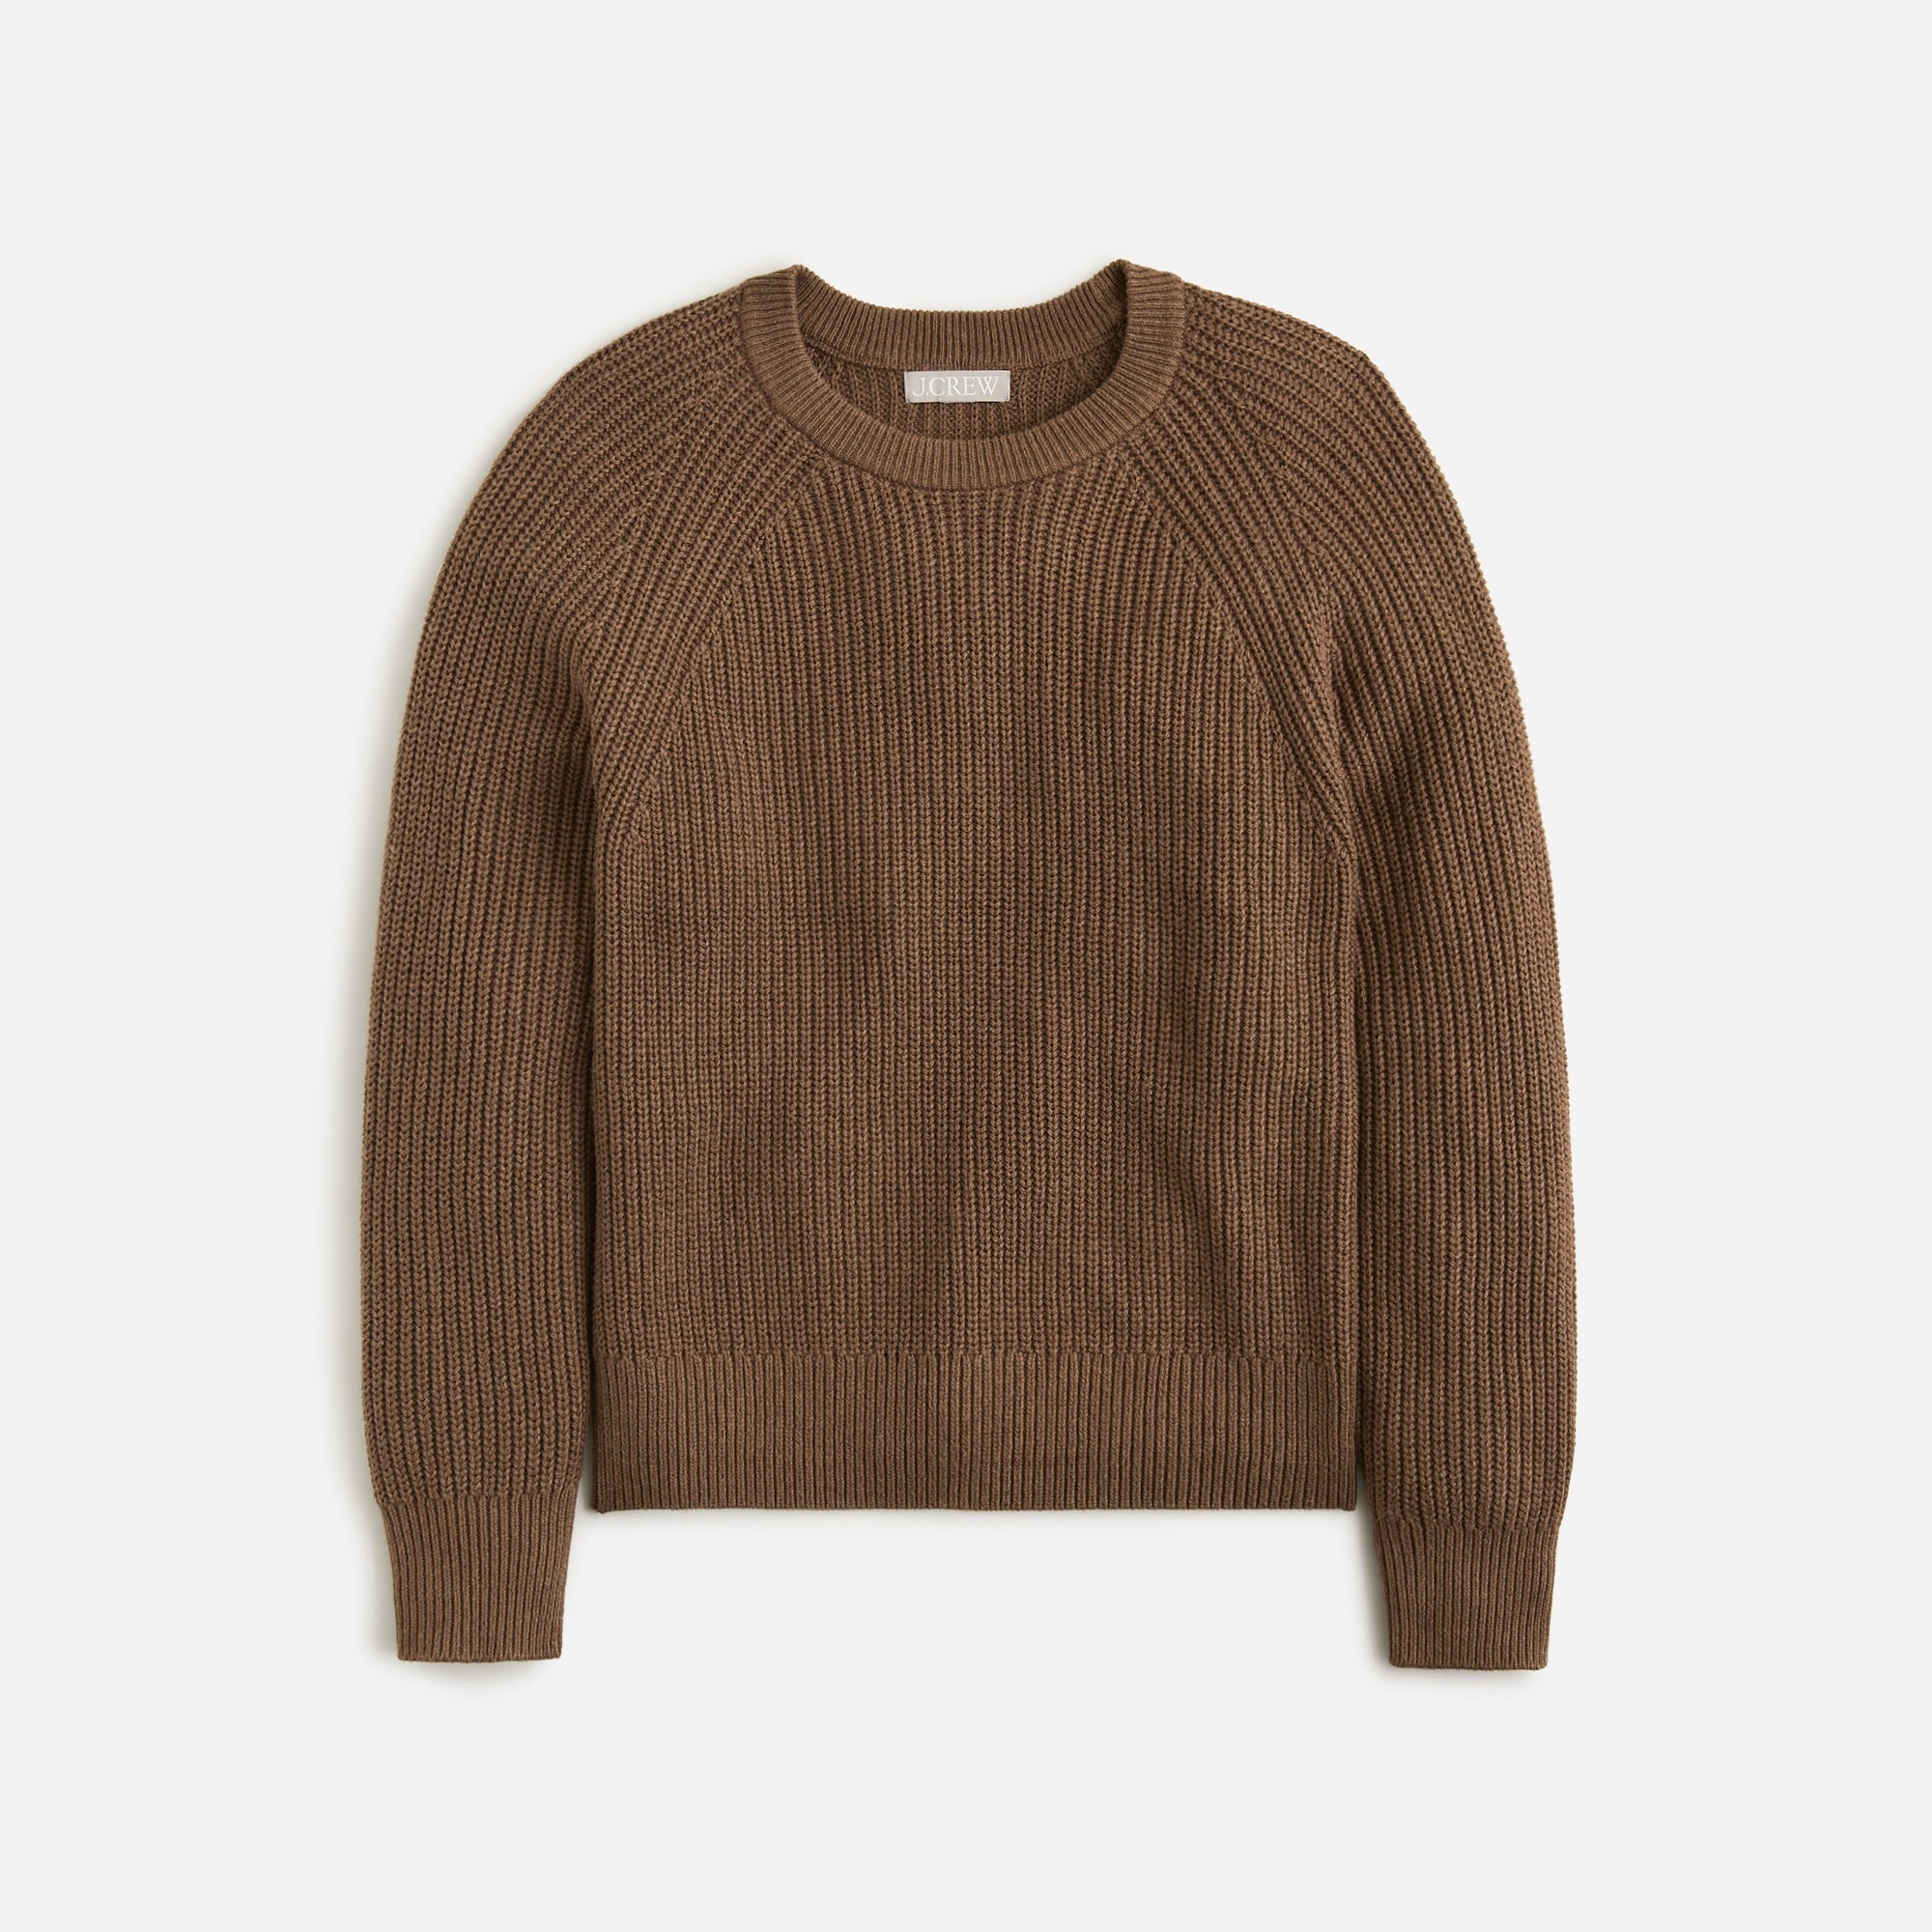 J.Crew: Cotton Fisherman Sweater For Women